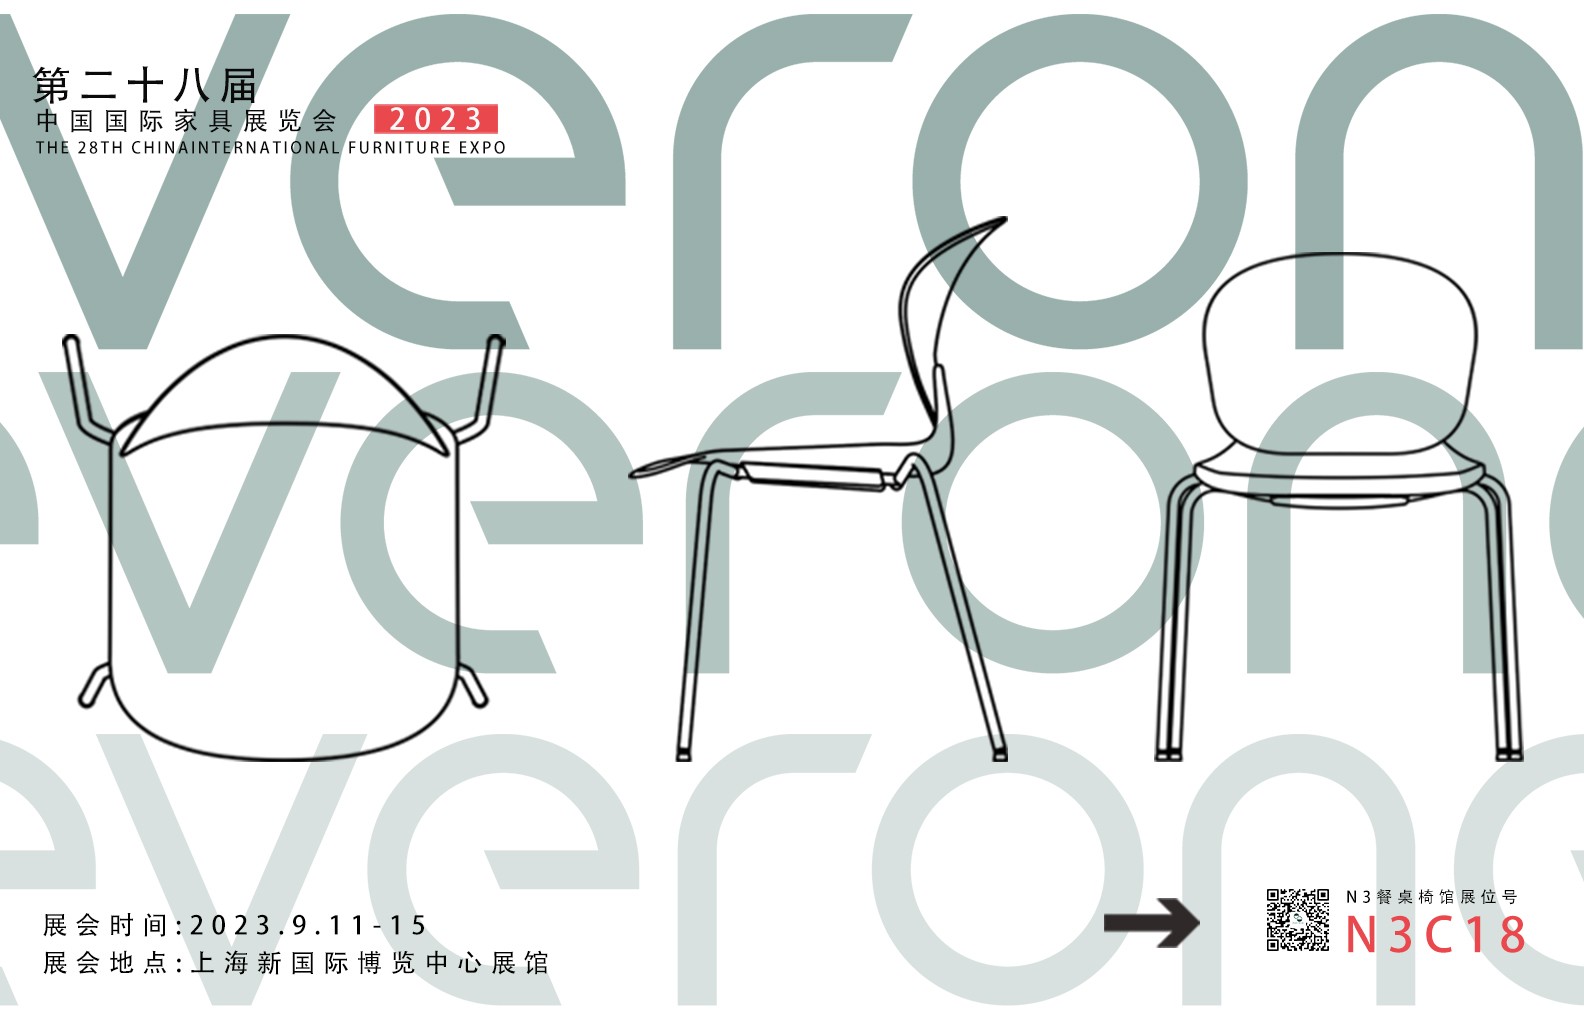 Exhibition Spoiler | Everone invites you to explore the Shanghai Furniture Exhibition